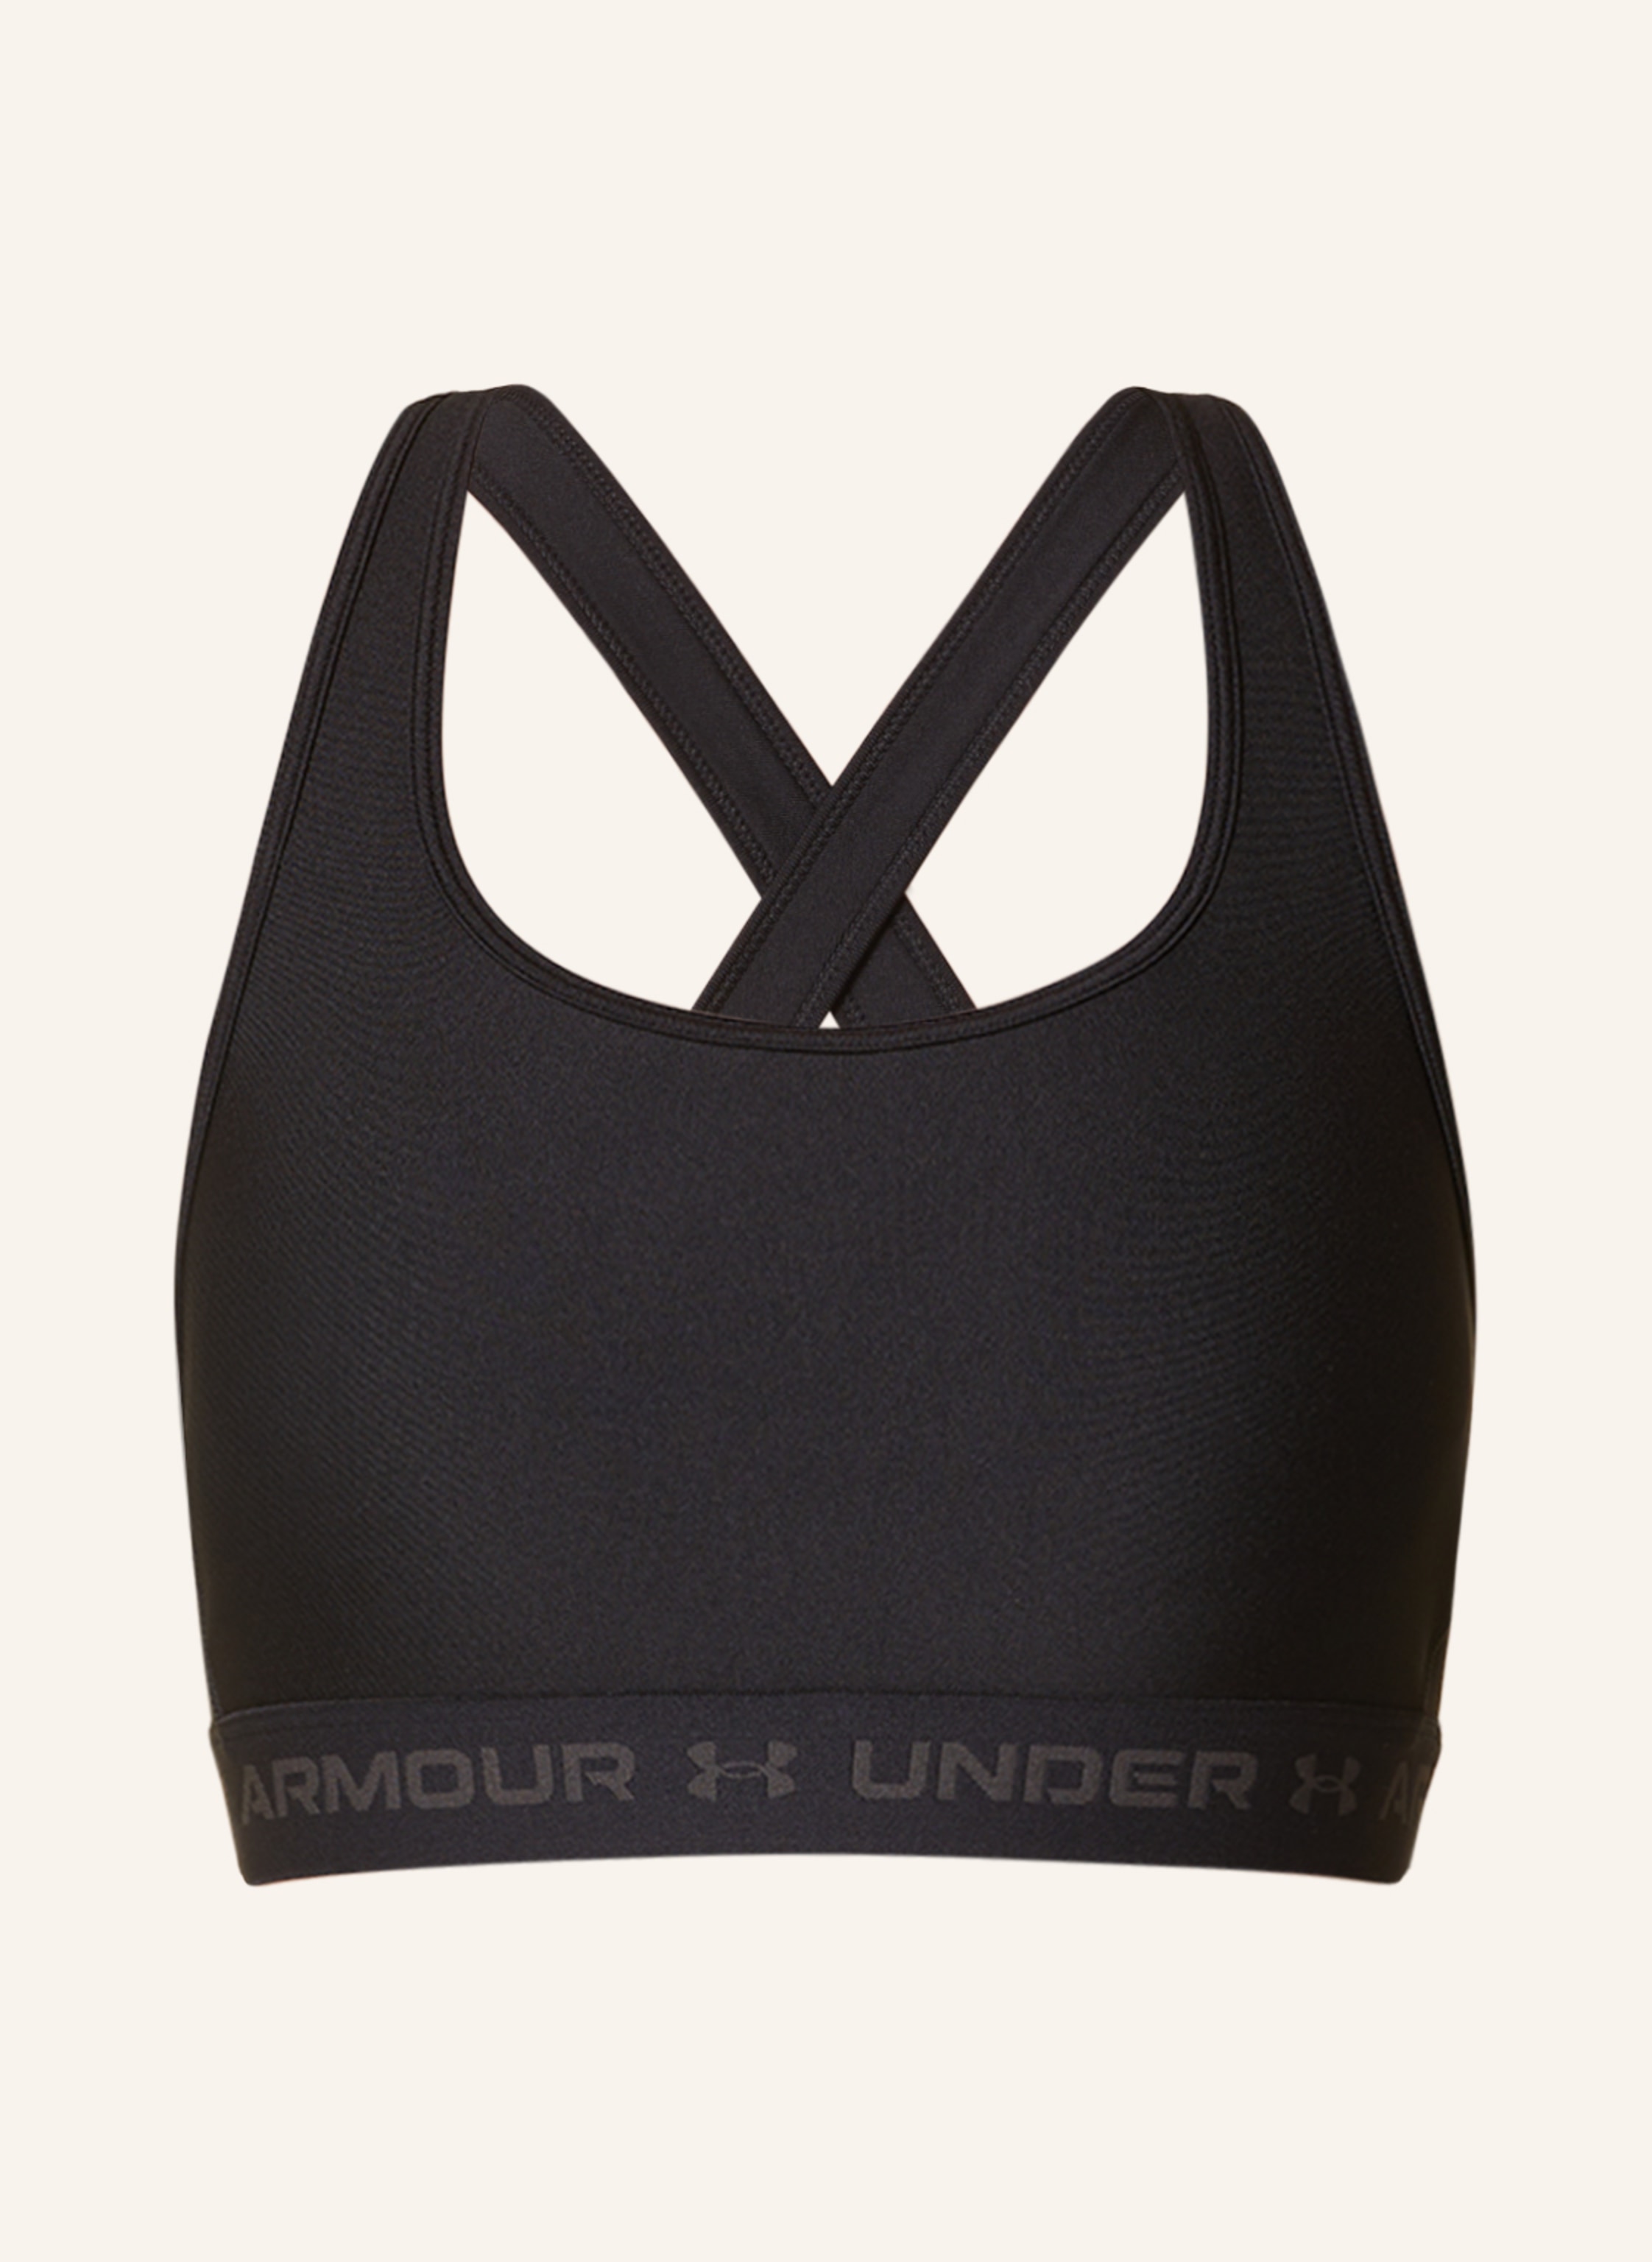 UNDER ARMOUR Sports bra CROSSBACK in black